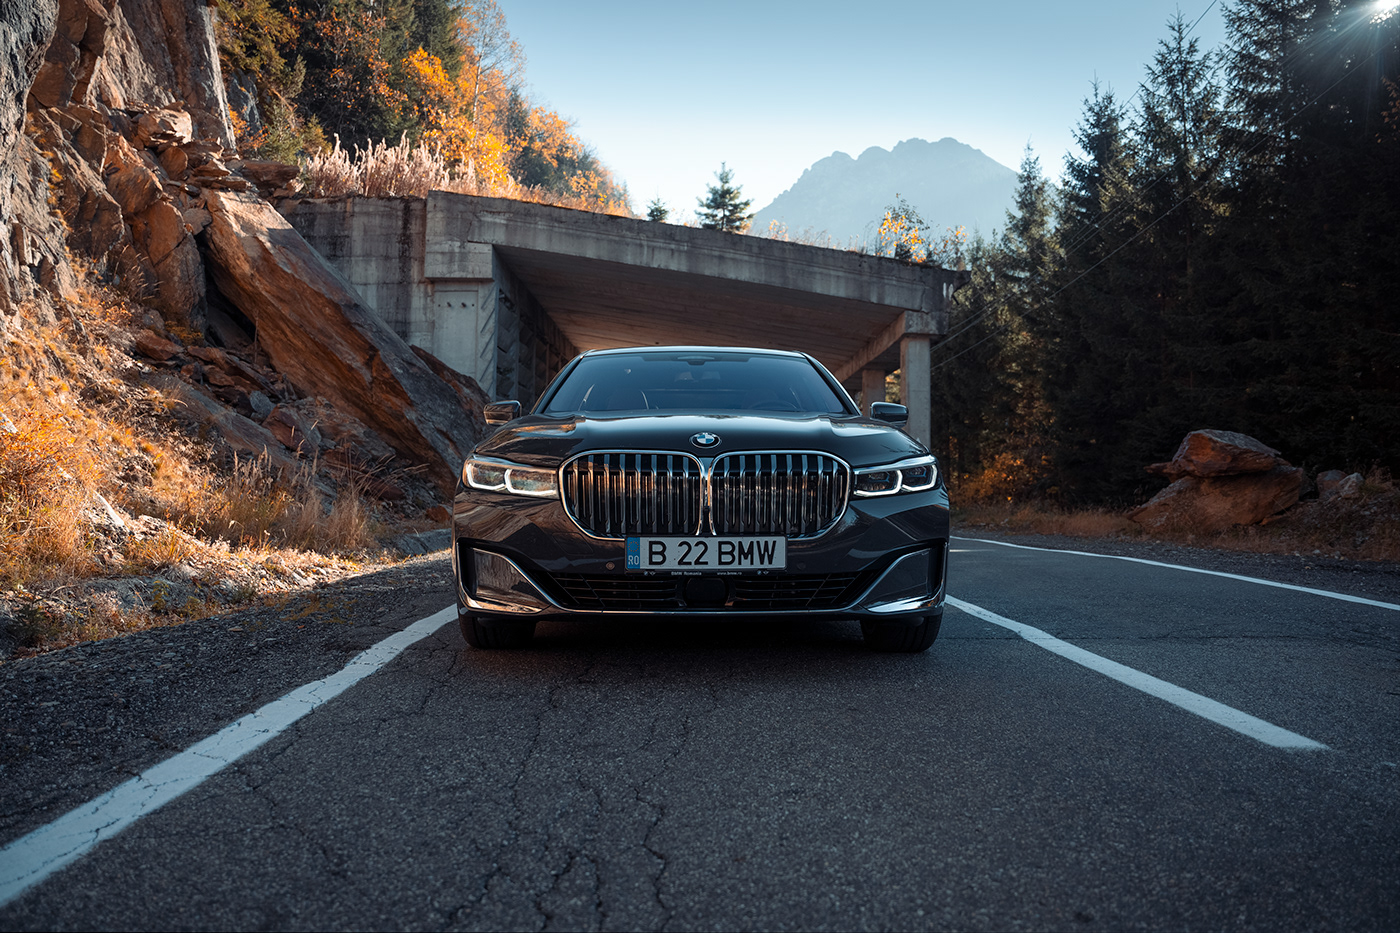 ads Advertising  automotive   BMW car design editorial media Photography  roads